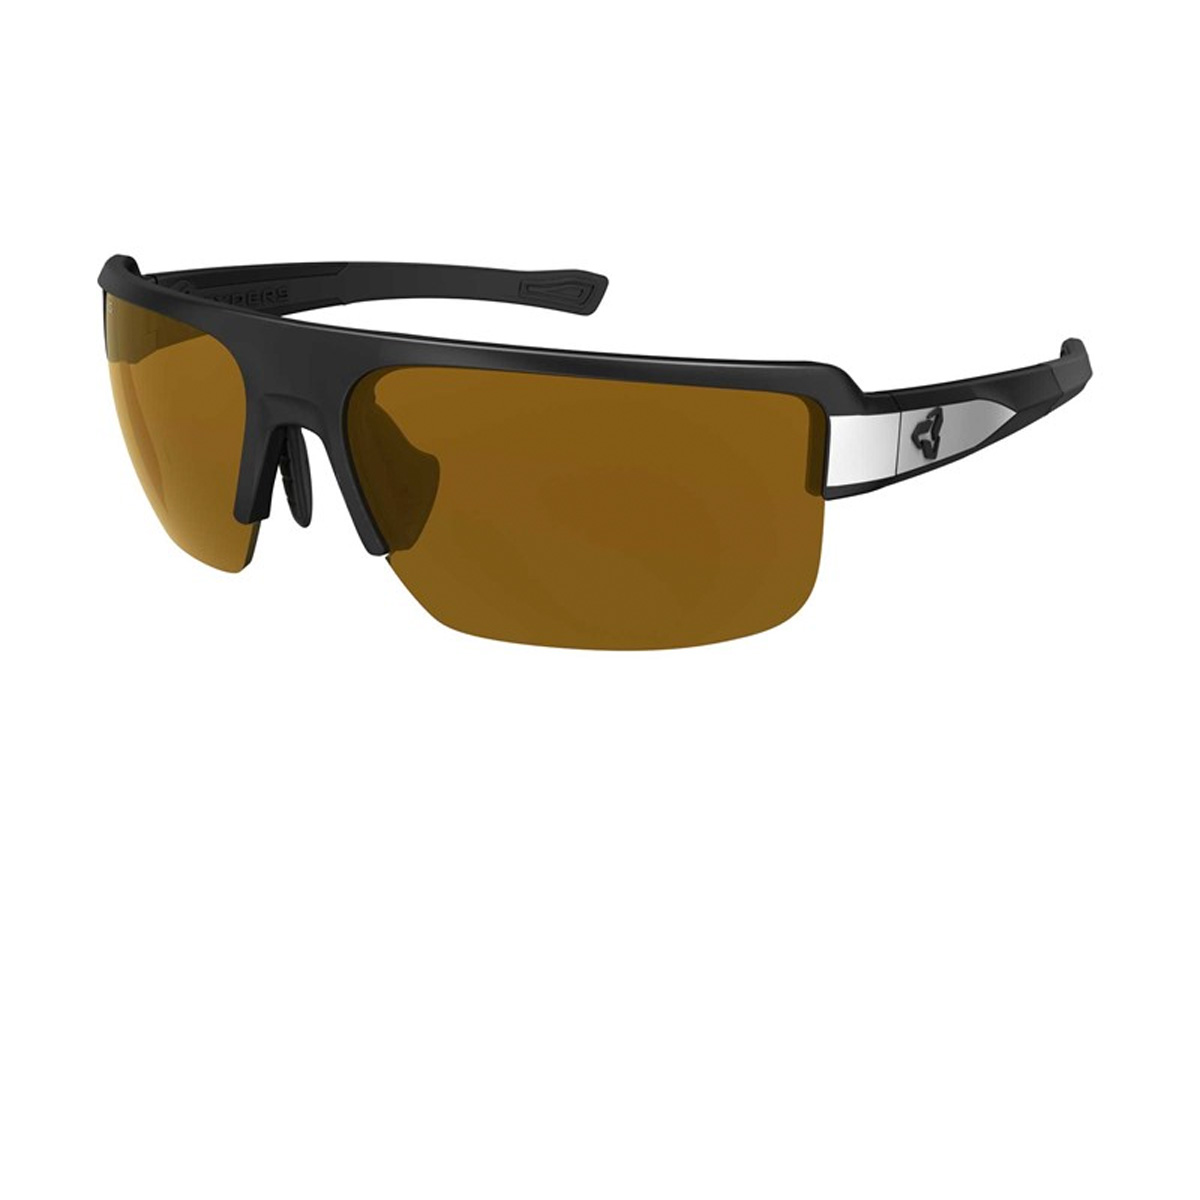 Ryders Eyewear Seventh AntiFog Sunglasses - 2-tone (BLACK-WHITE / BROWN LENS ANTI-FOG) - image 1 of 1